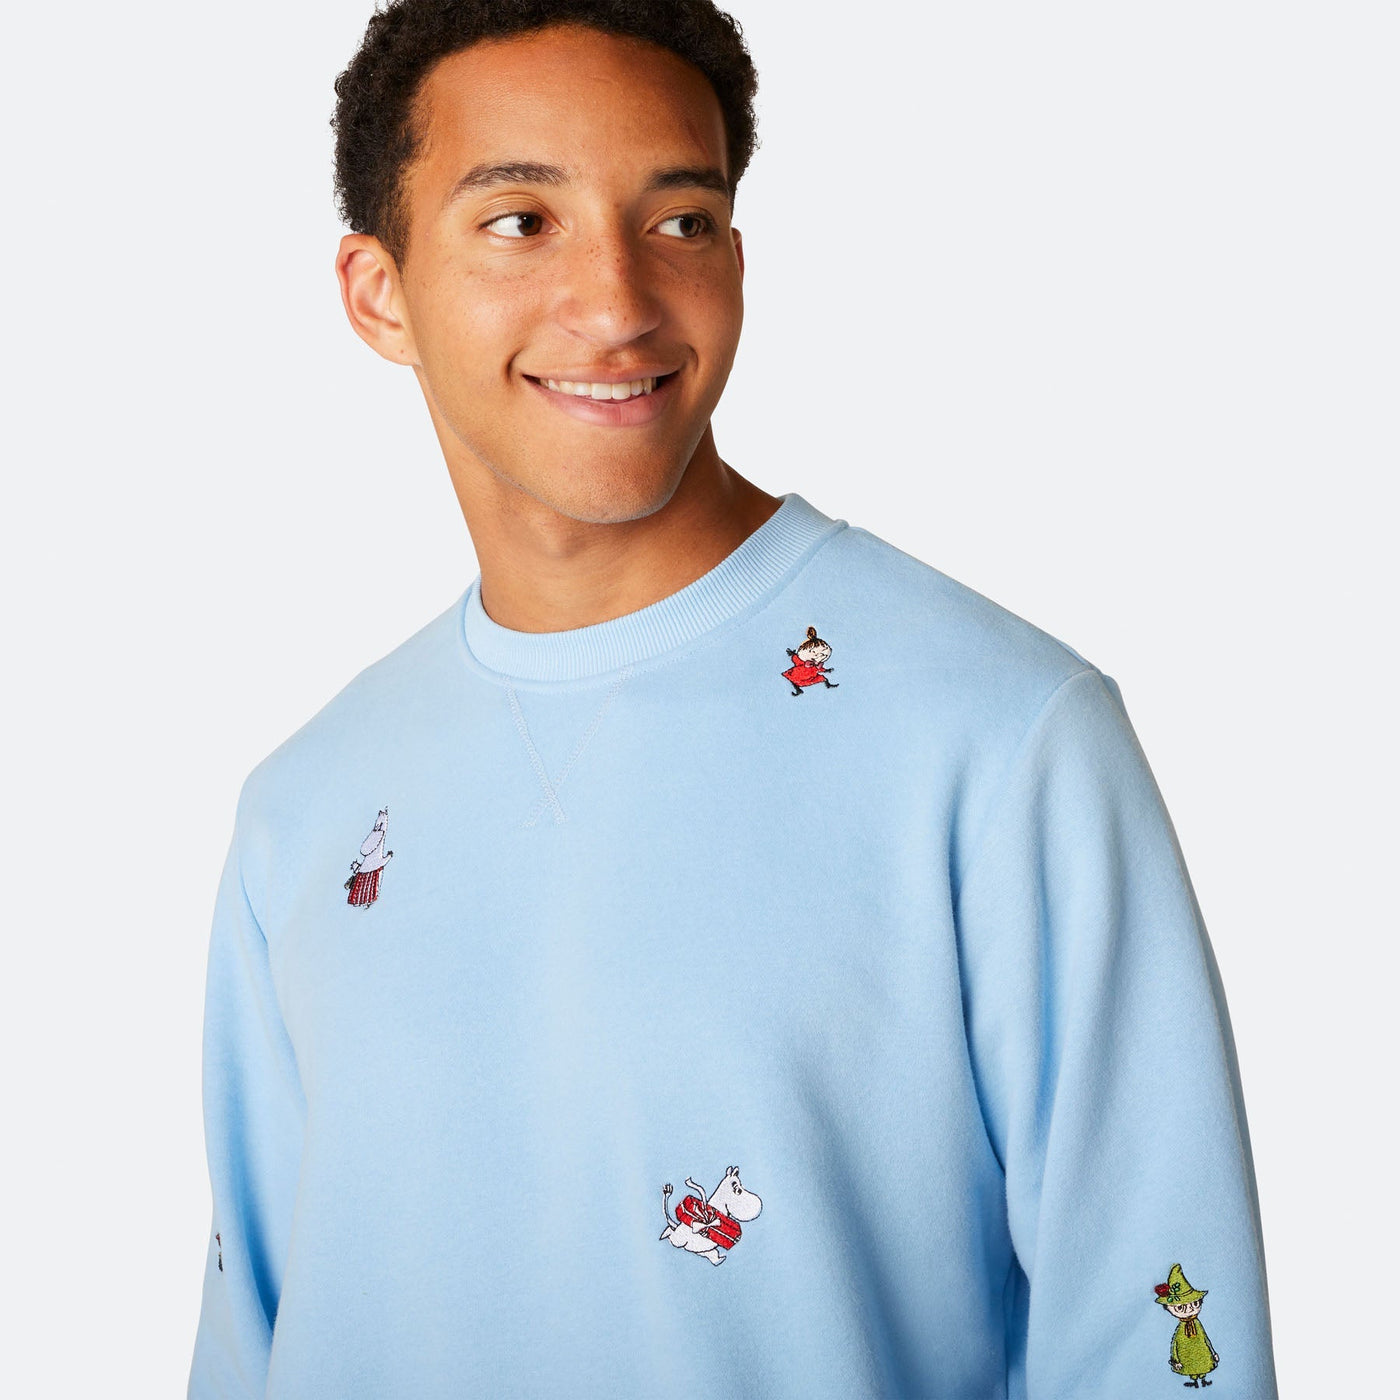 Mumins Blaues Weihnachts-Sweatshirt Herren